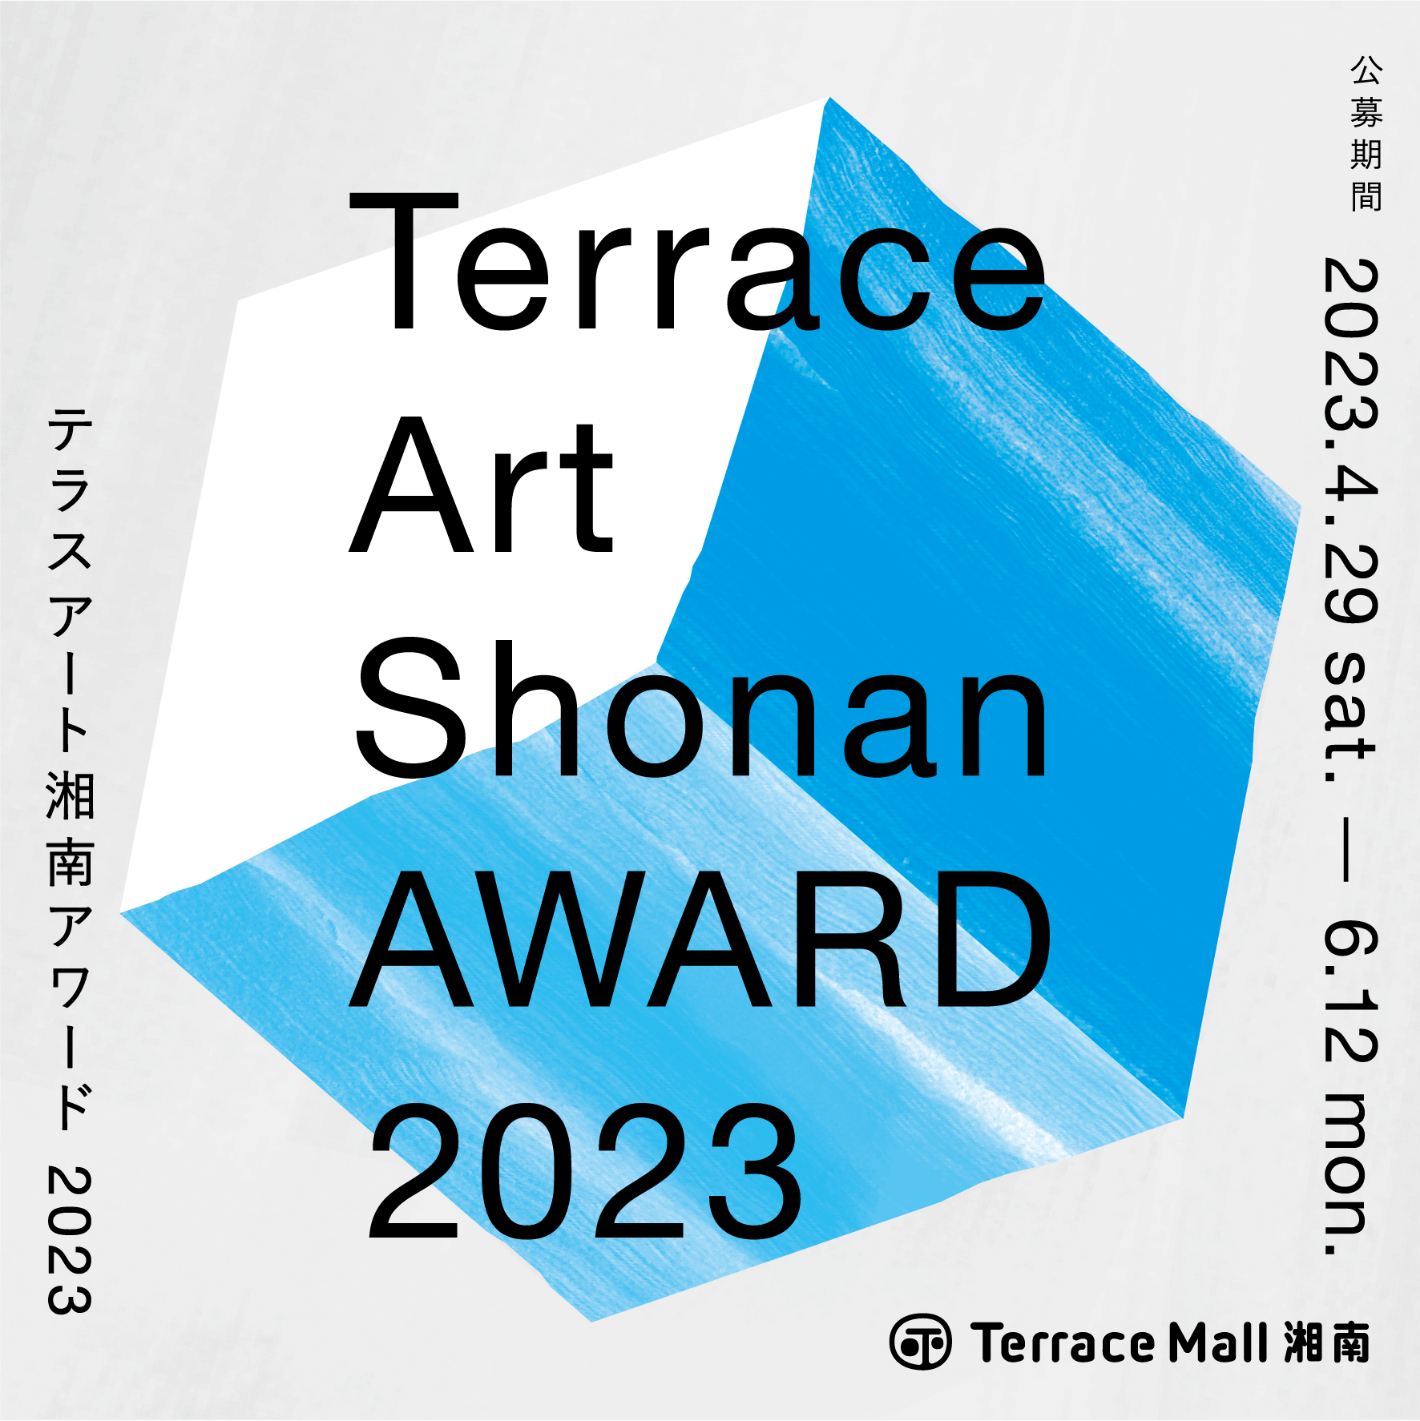 Terrace Art Shonan AWARD 2023